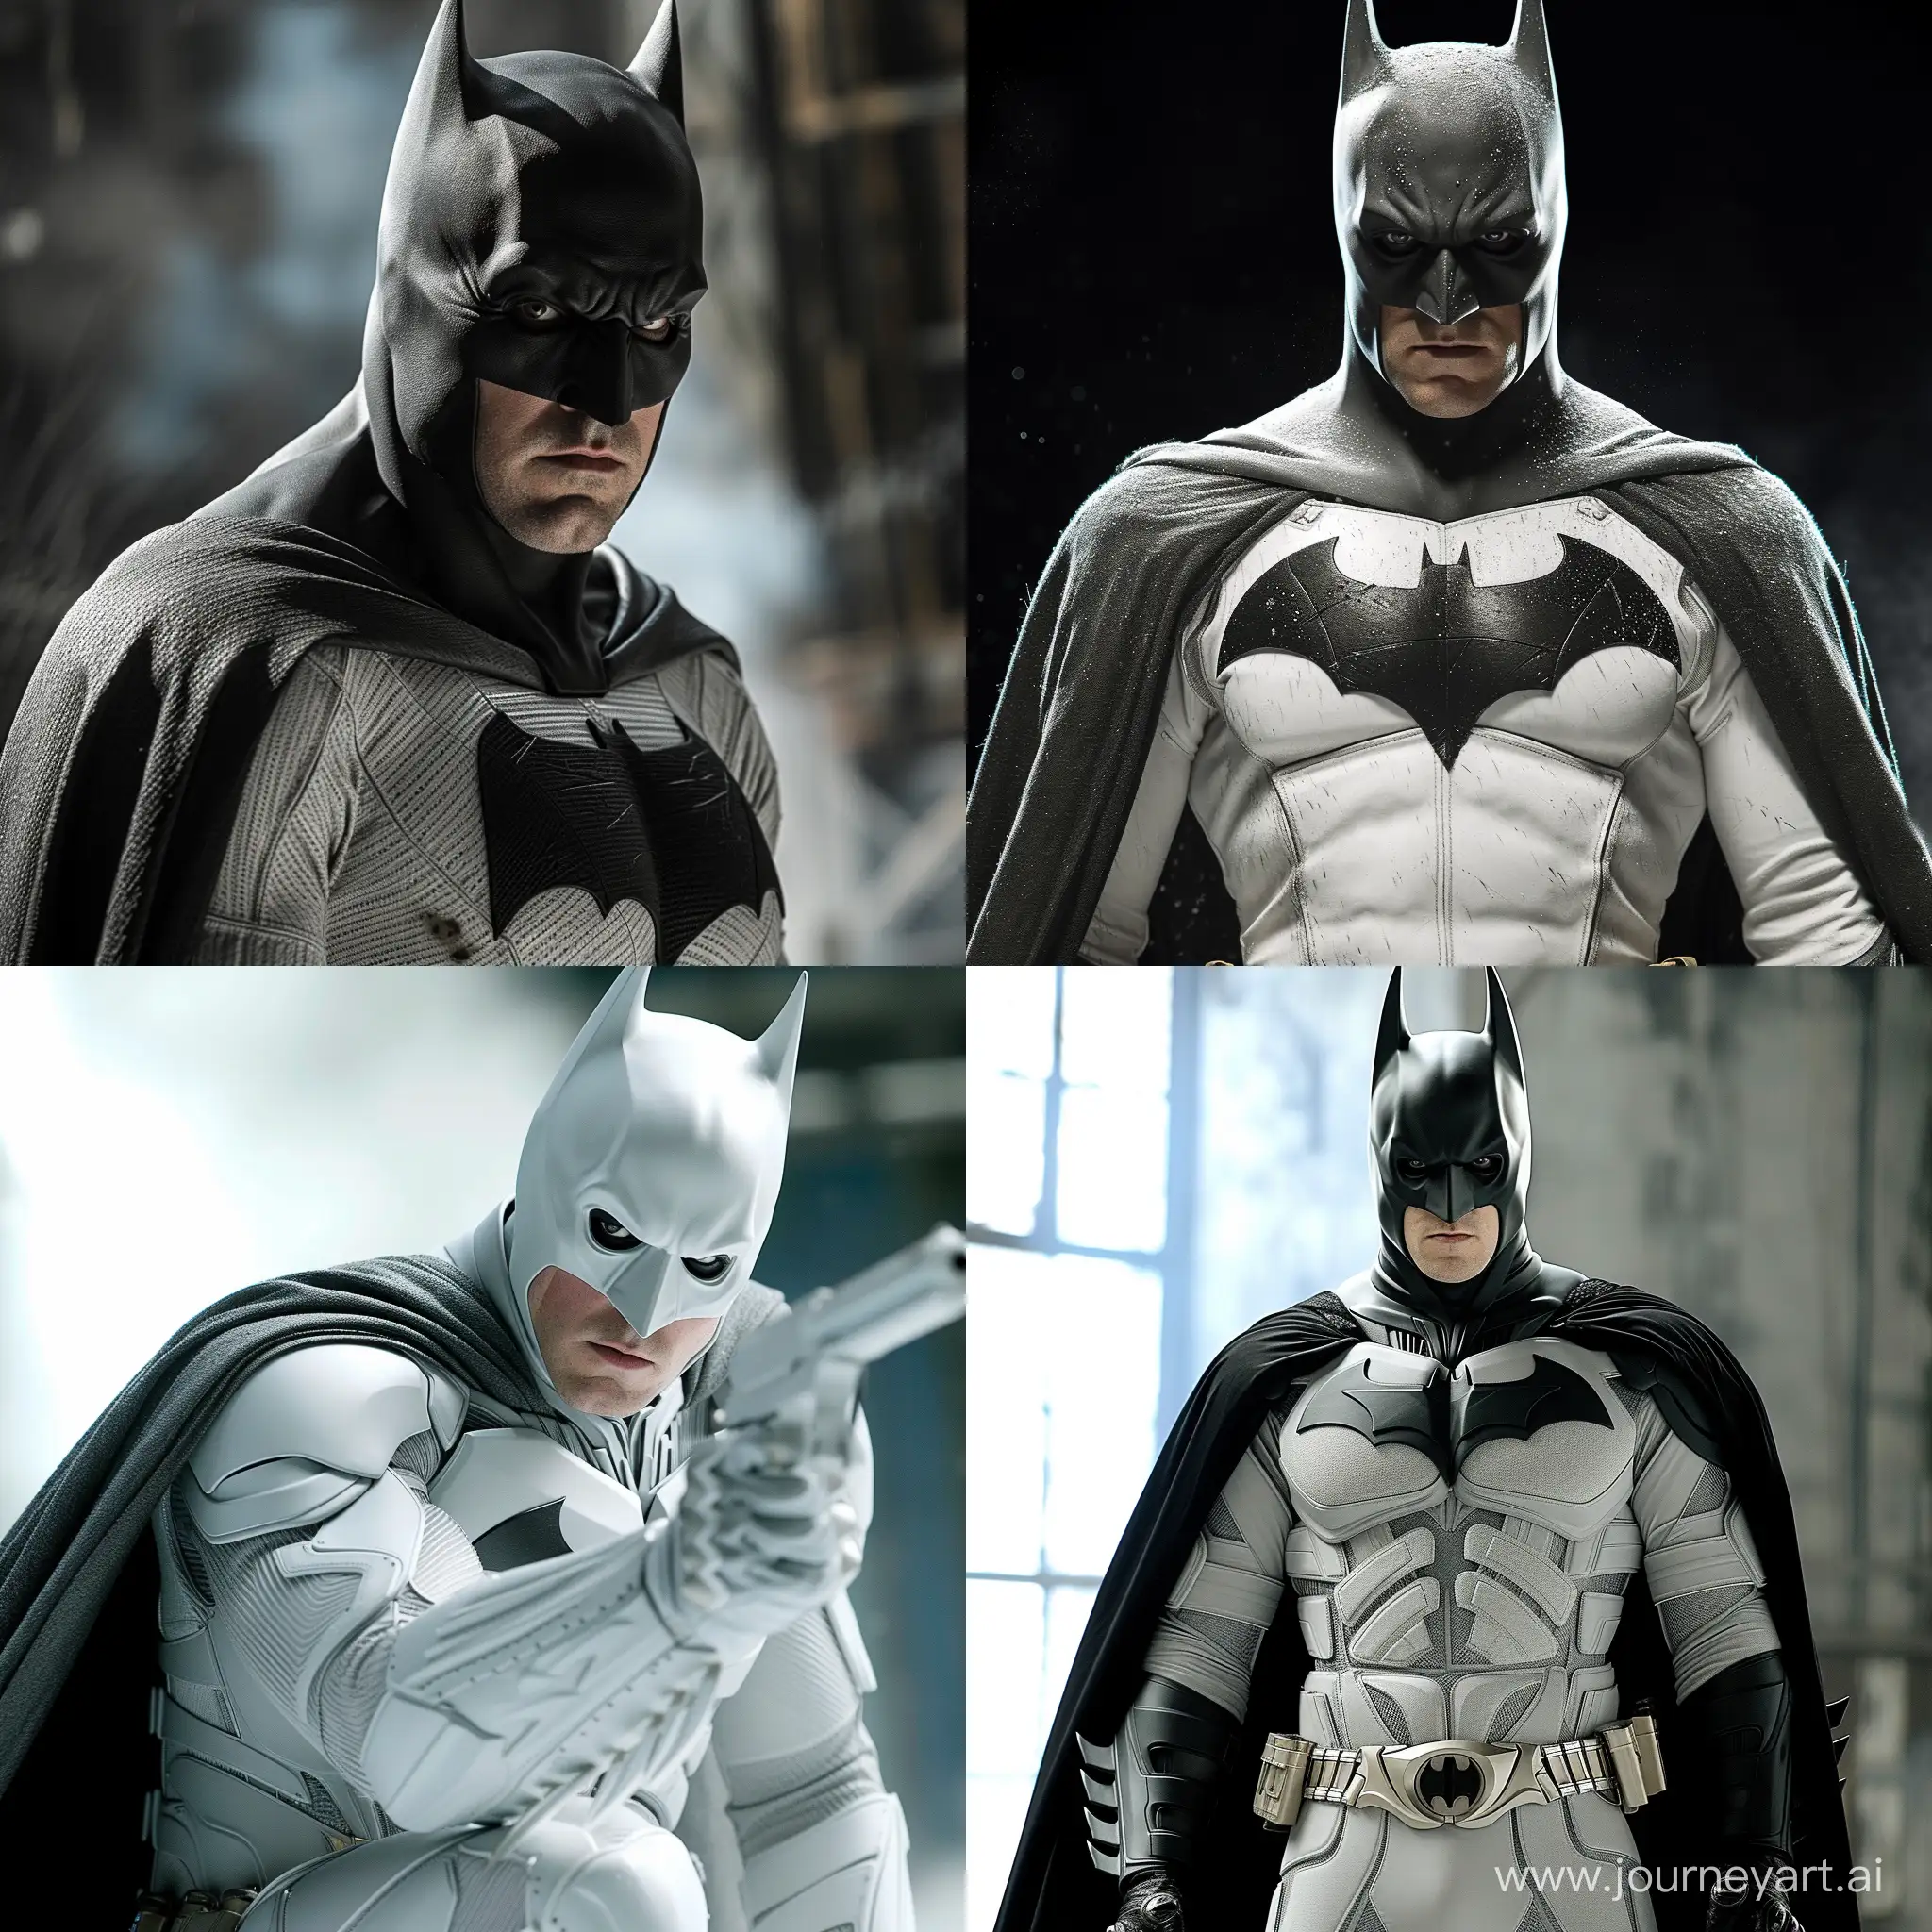 Christian-Bale-Portraying-Batman-in-a-Striking-White-Costume